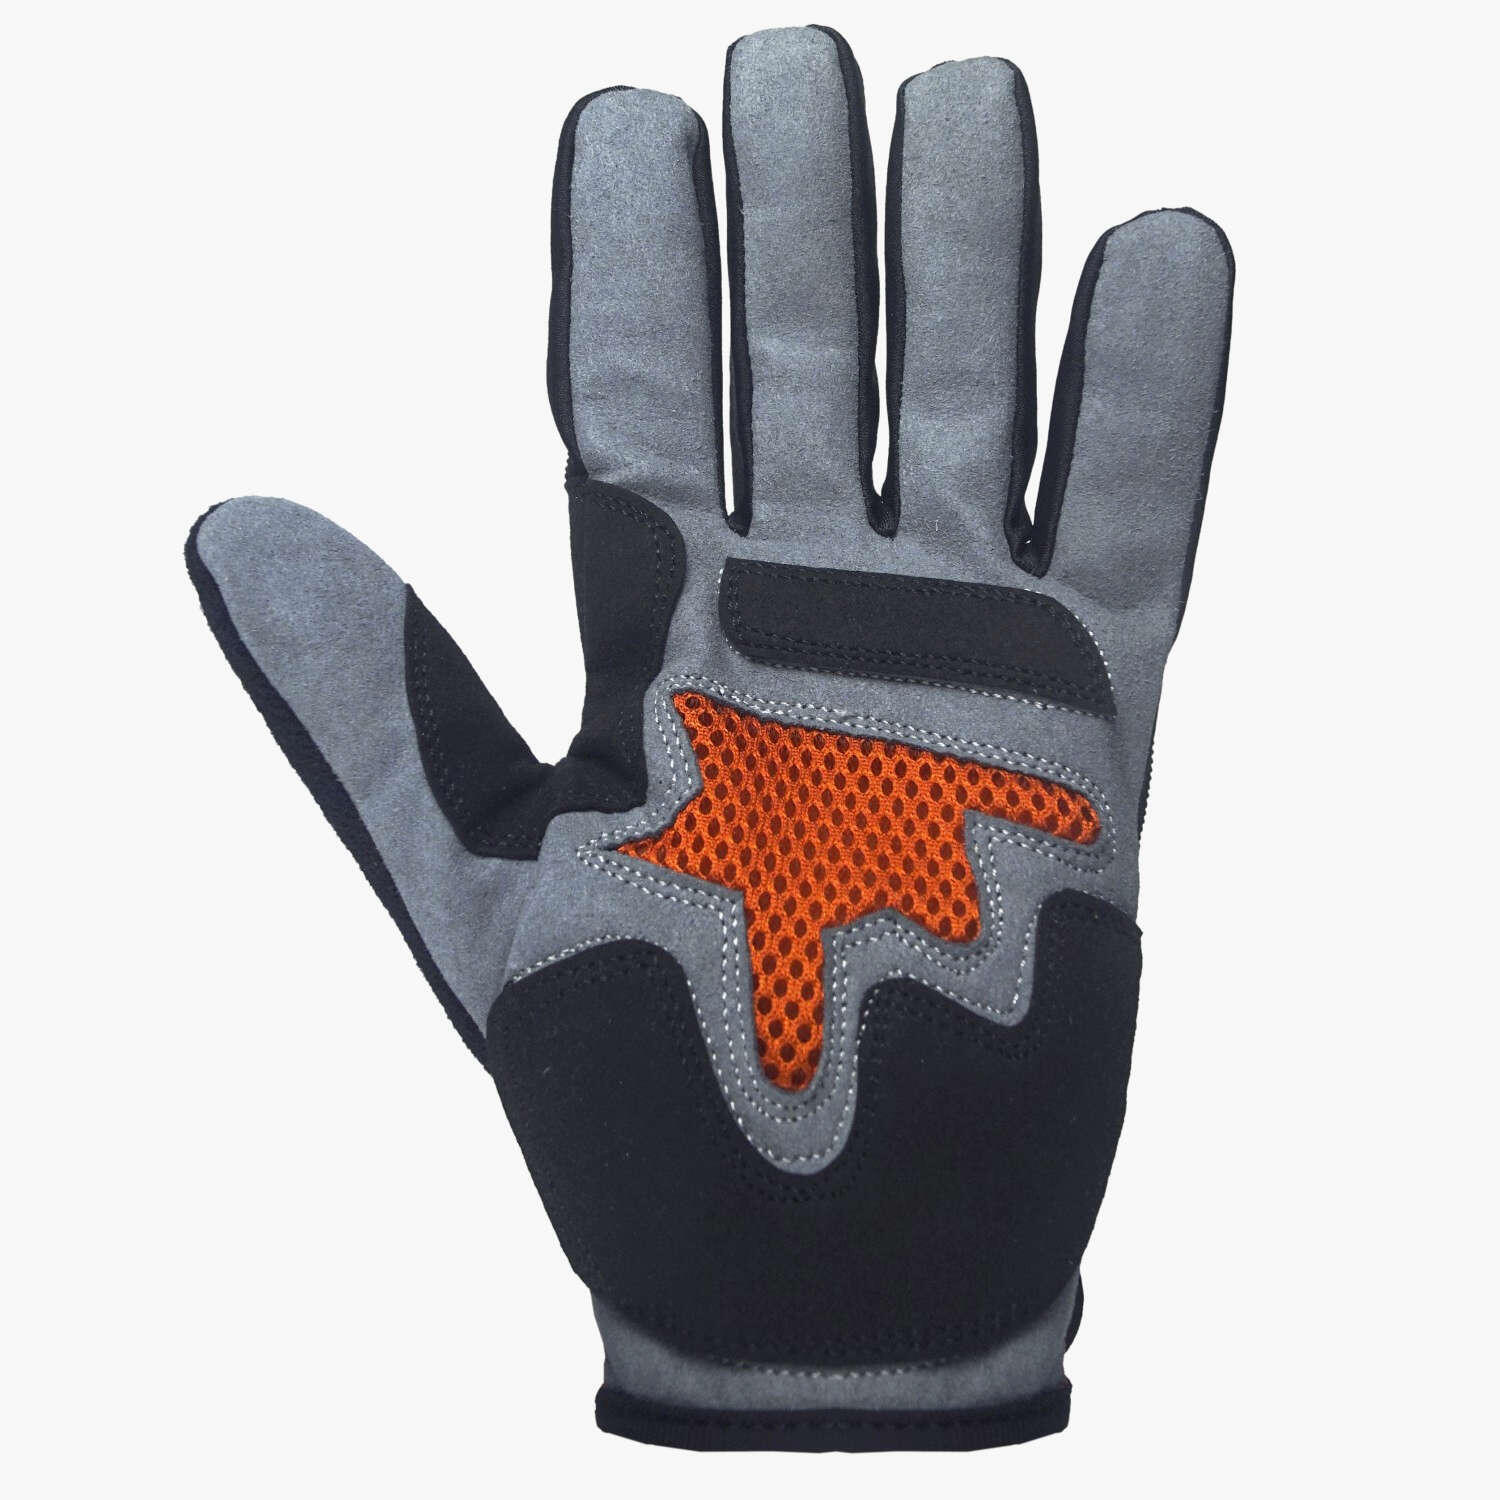 Lomo Mountain Bike Gloves - Black / Grey / Orange 6/8